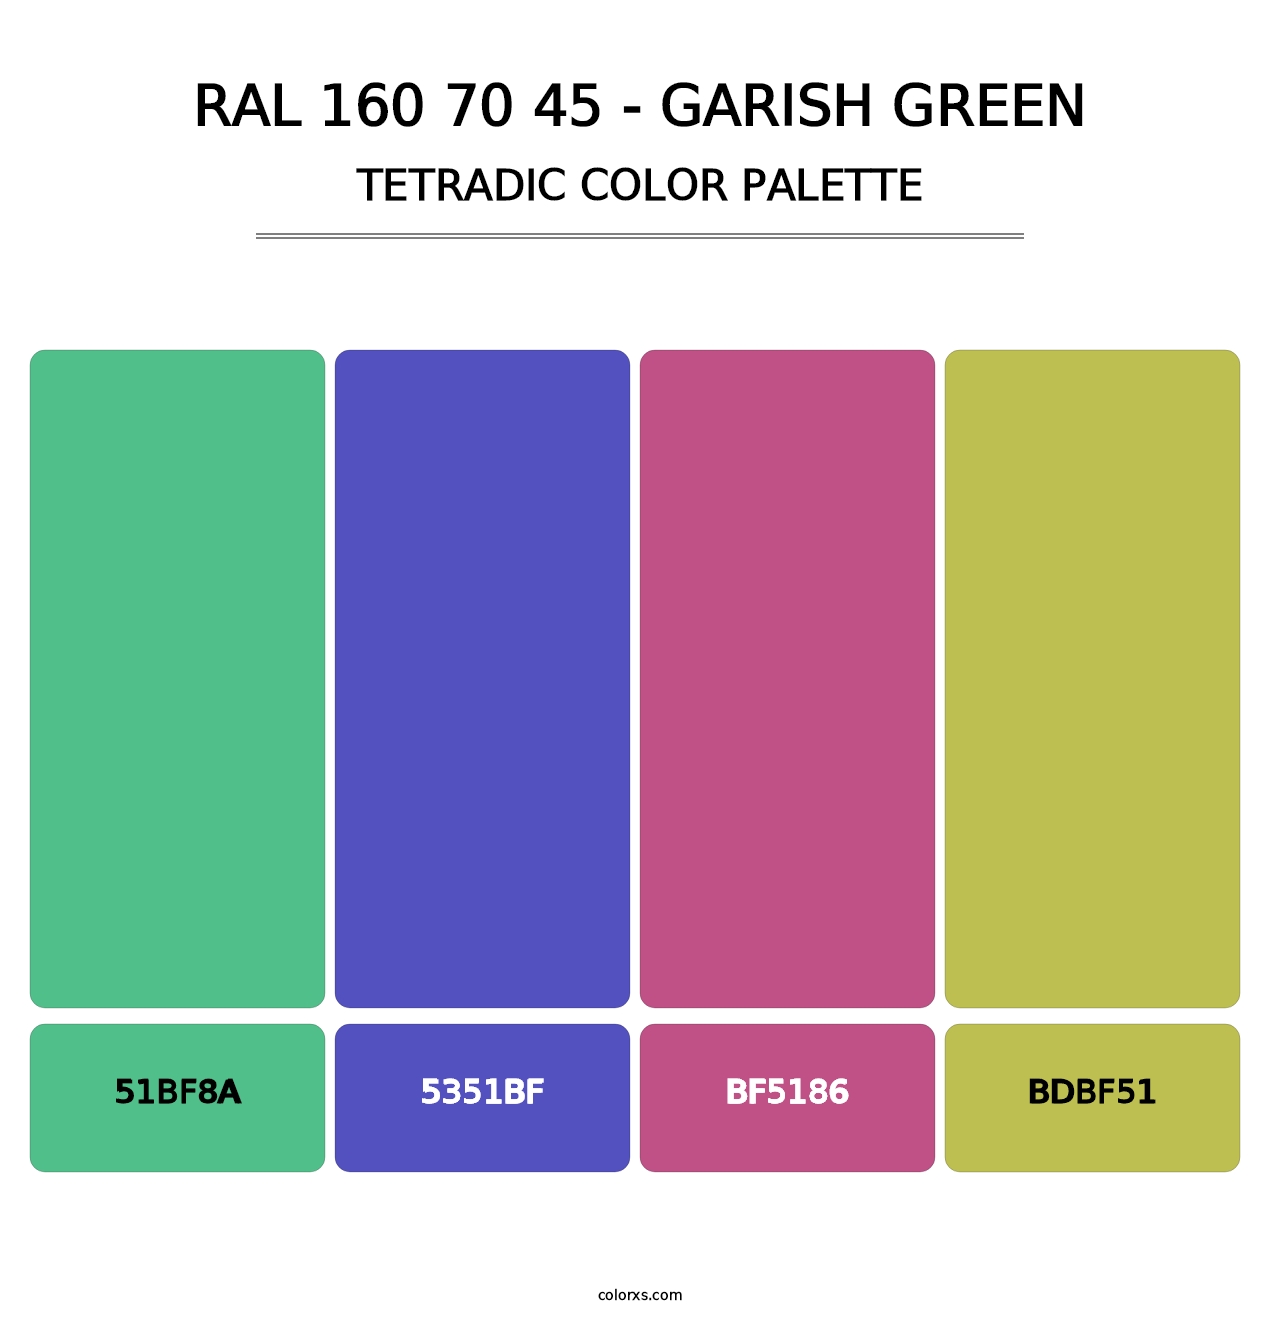 RAL 160 70 45 - Garish Green - Tetradic Color Palette